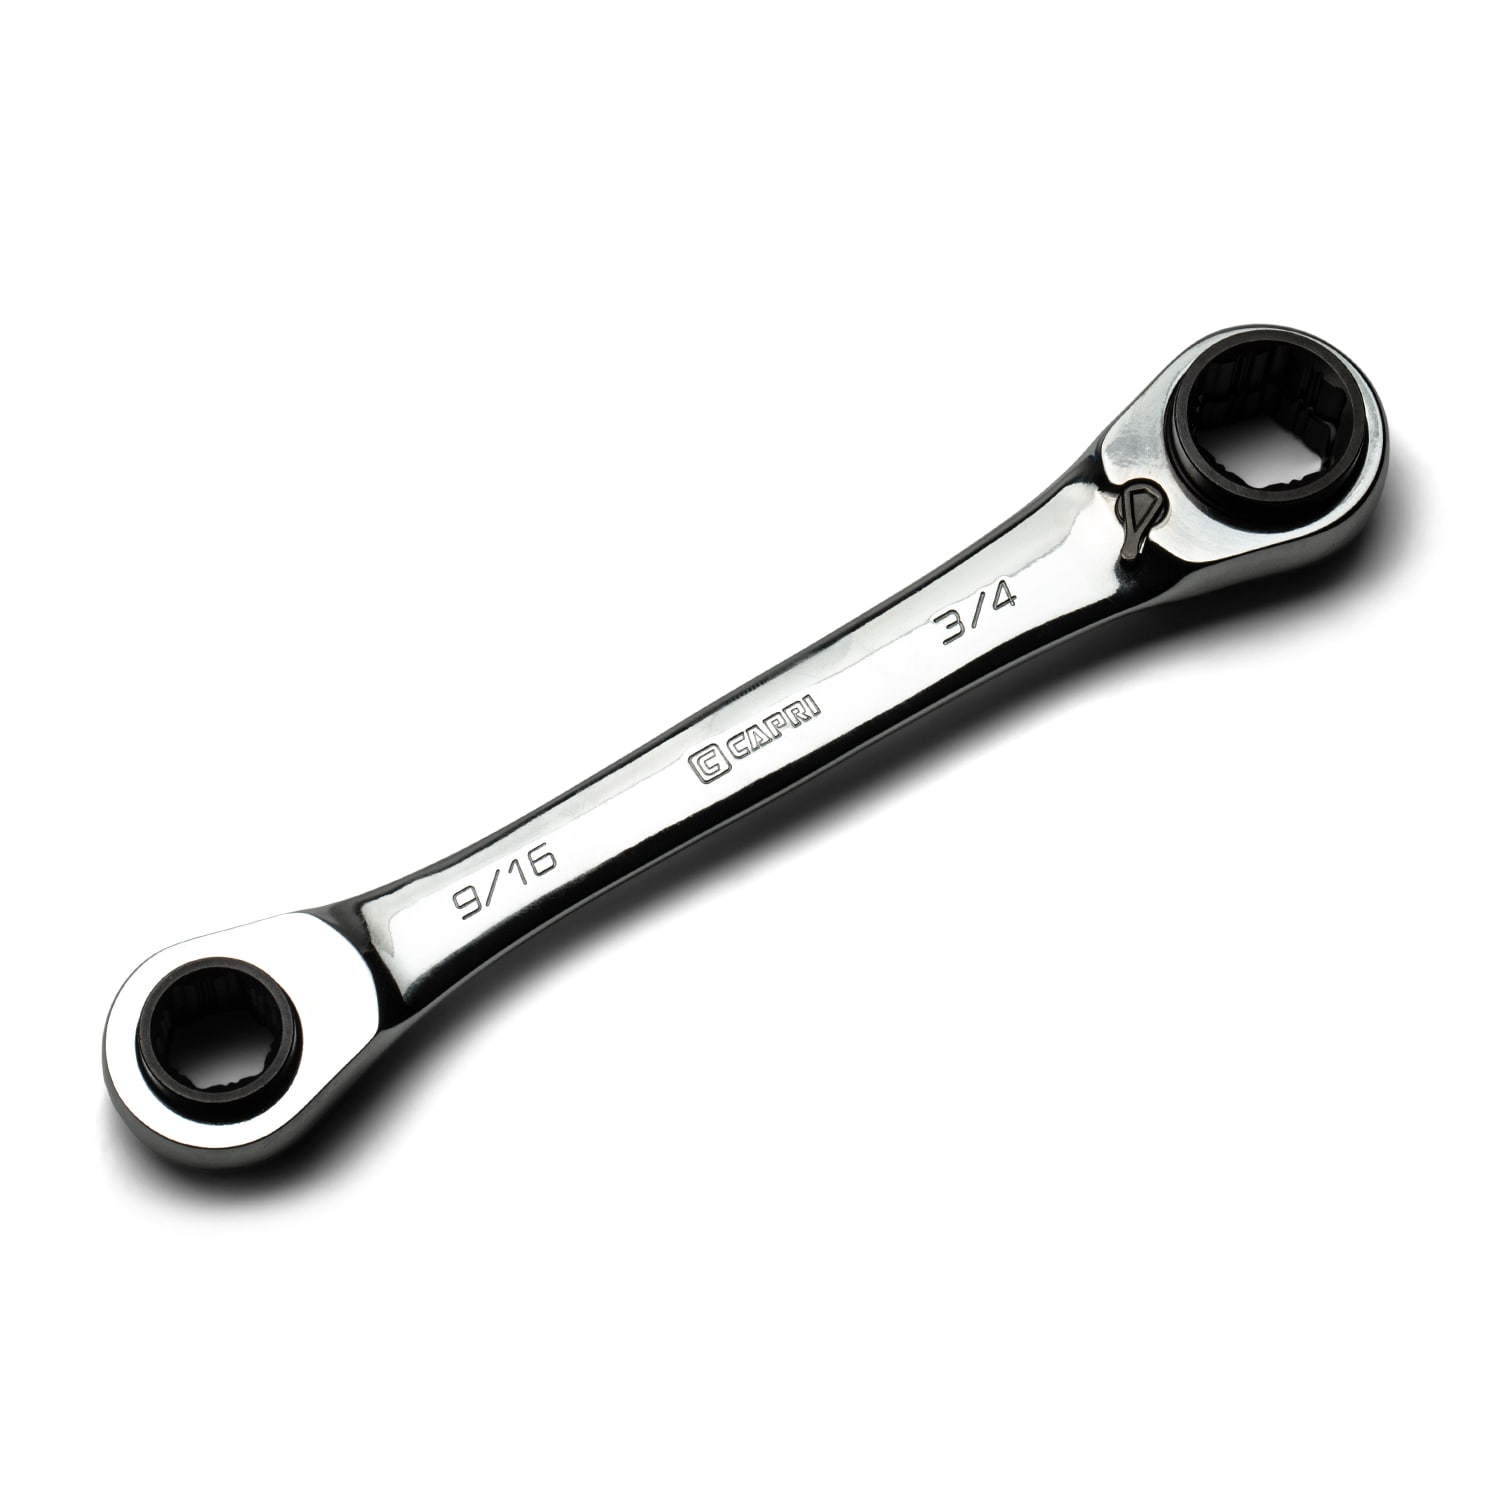 Plier Wrenches - Capri Tools